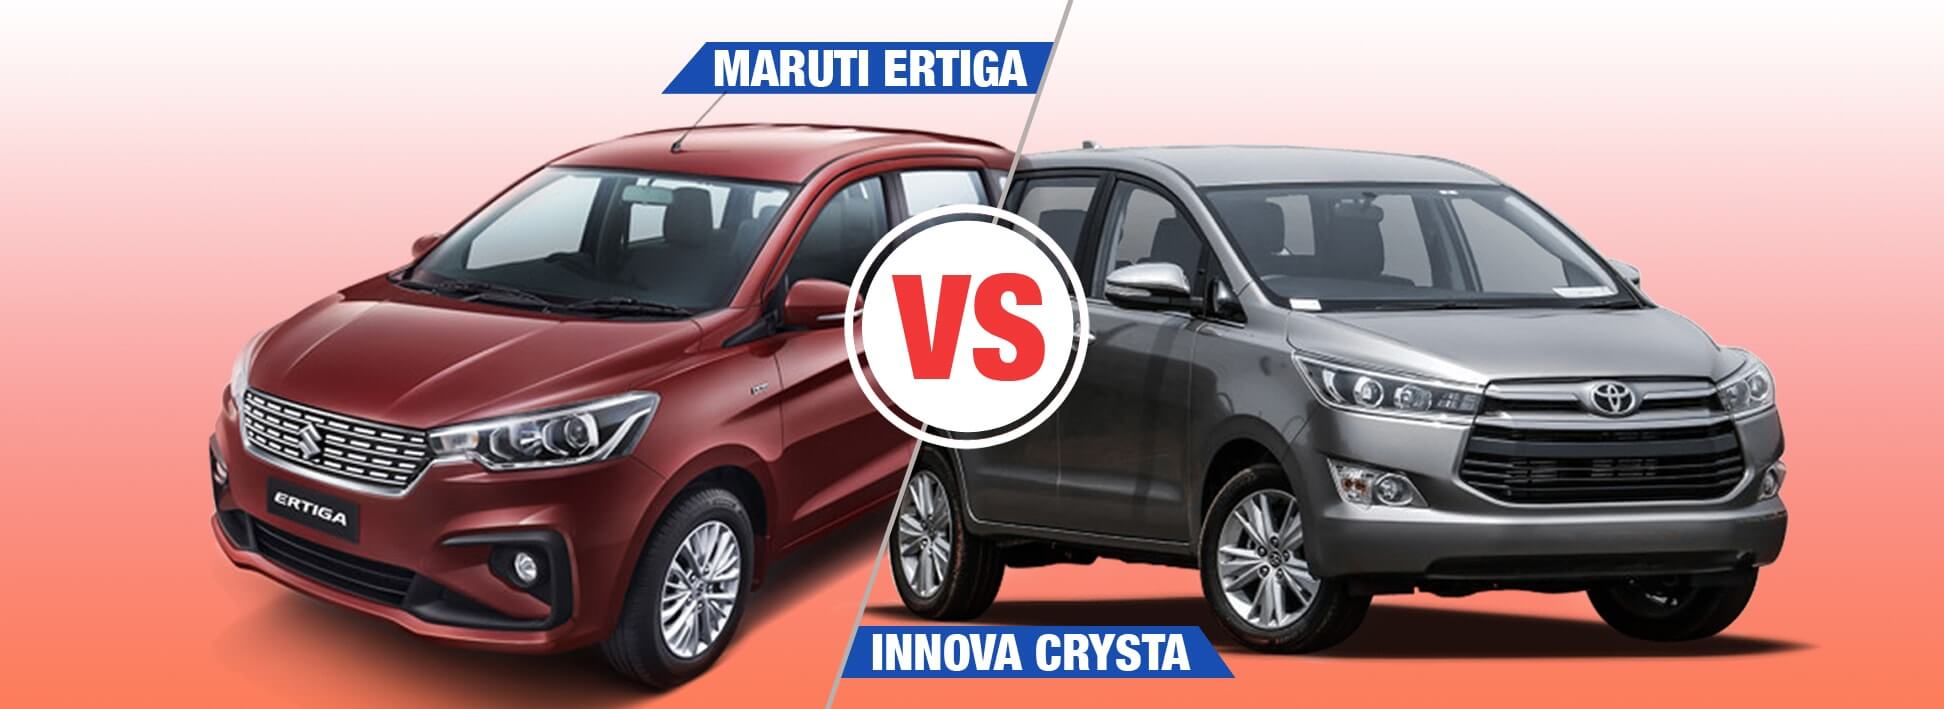 Maruti Suzuki Ertiga 2018 Vs Toyota Innova Crysta Comparison